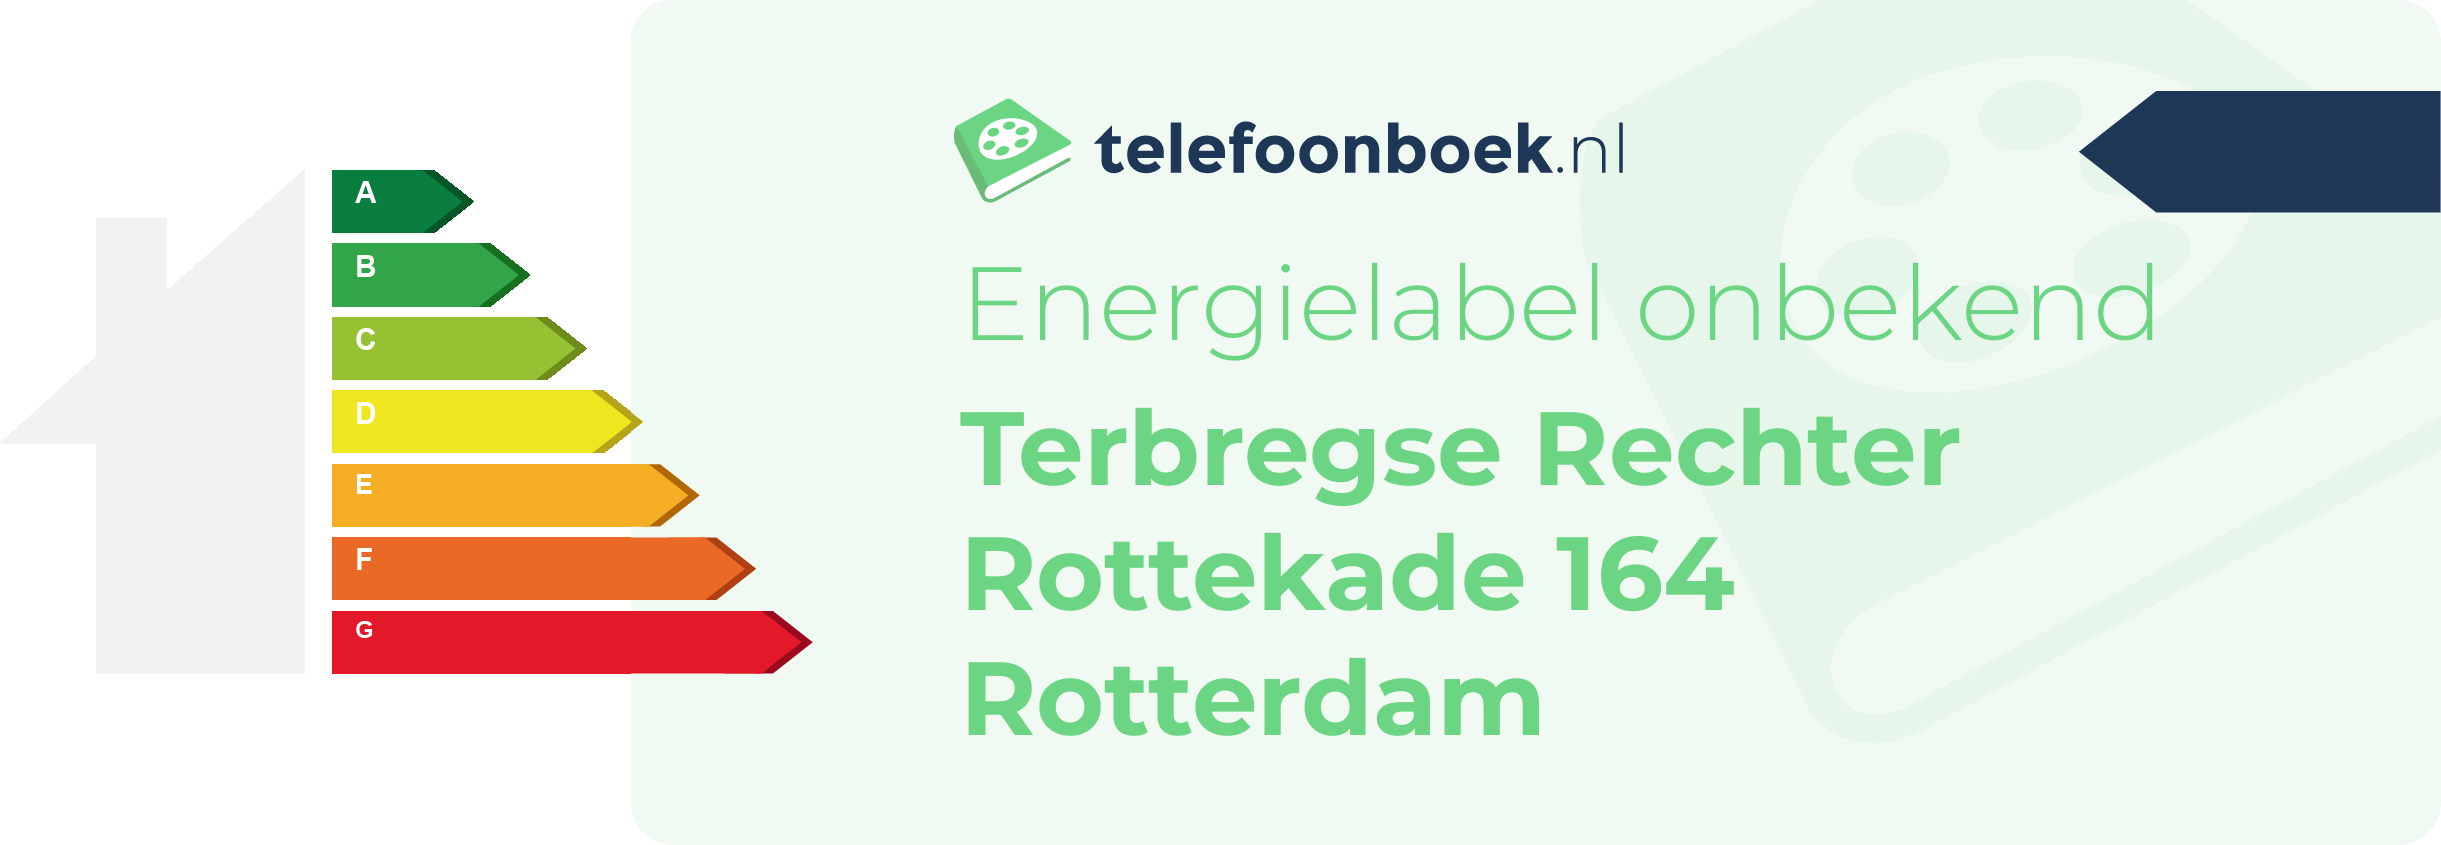 Energielabel Terbregse Rechter Rottekade 164 Rotterdam